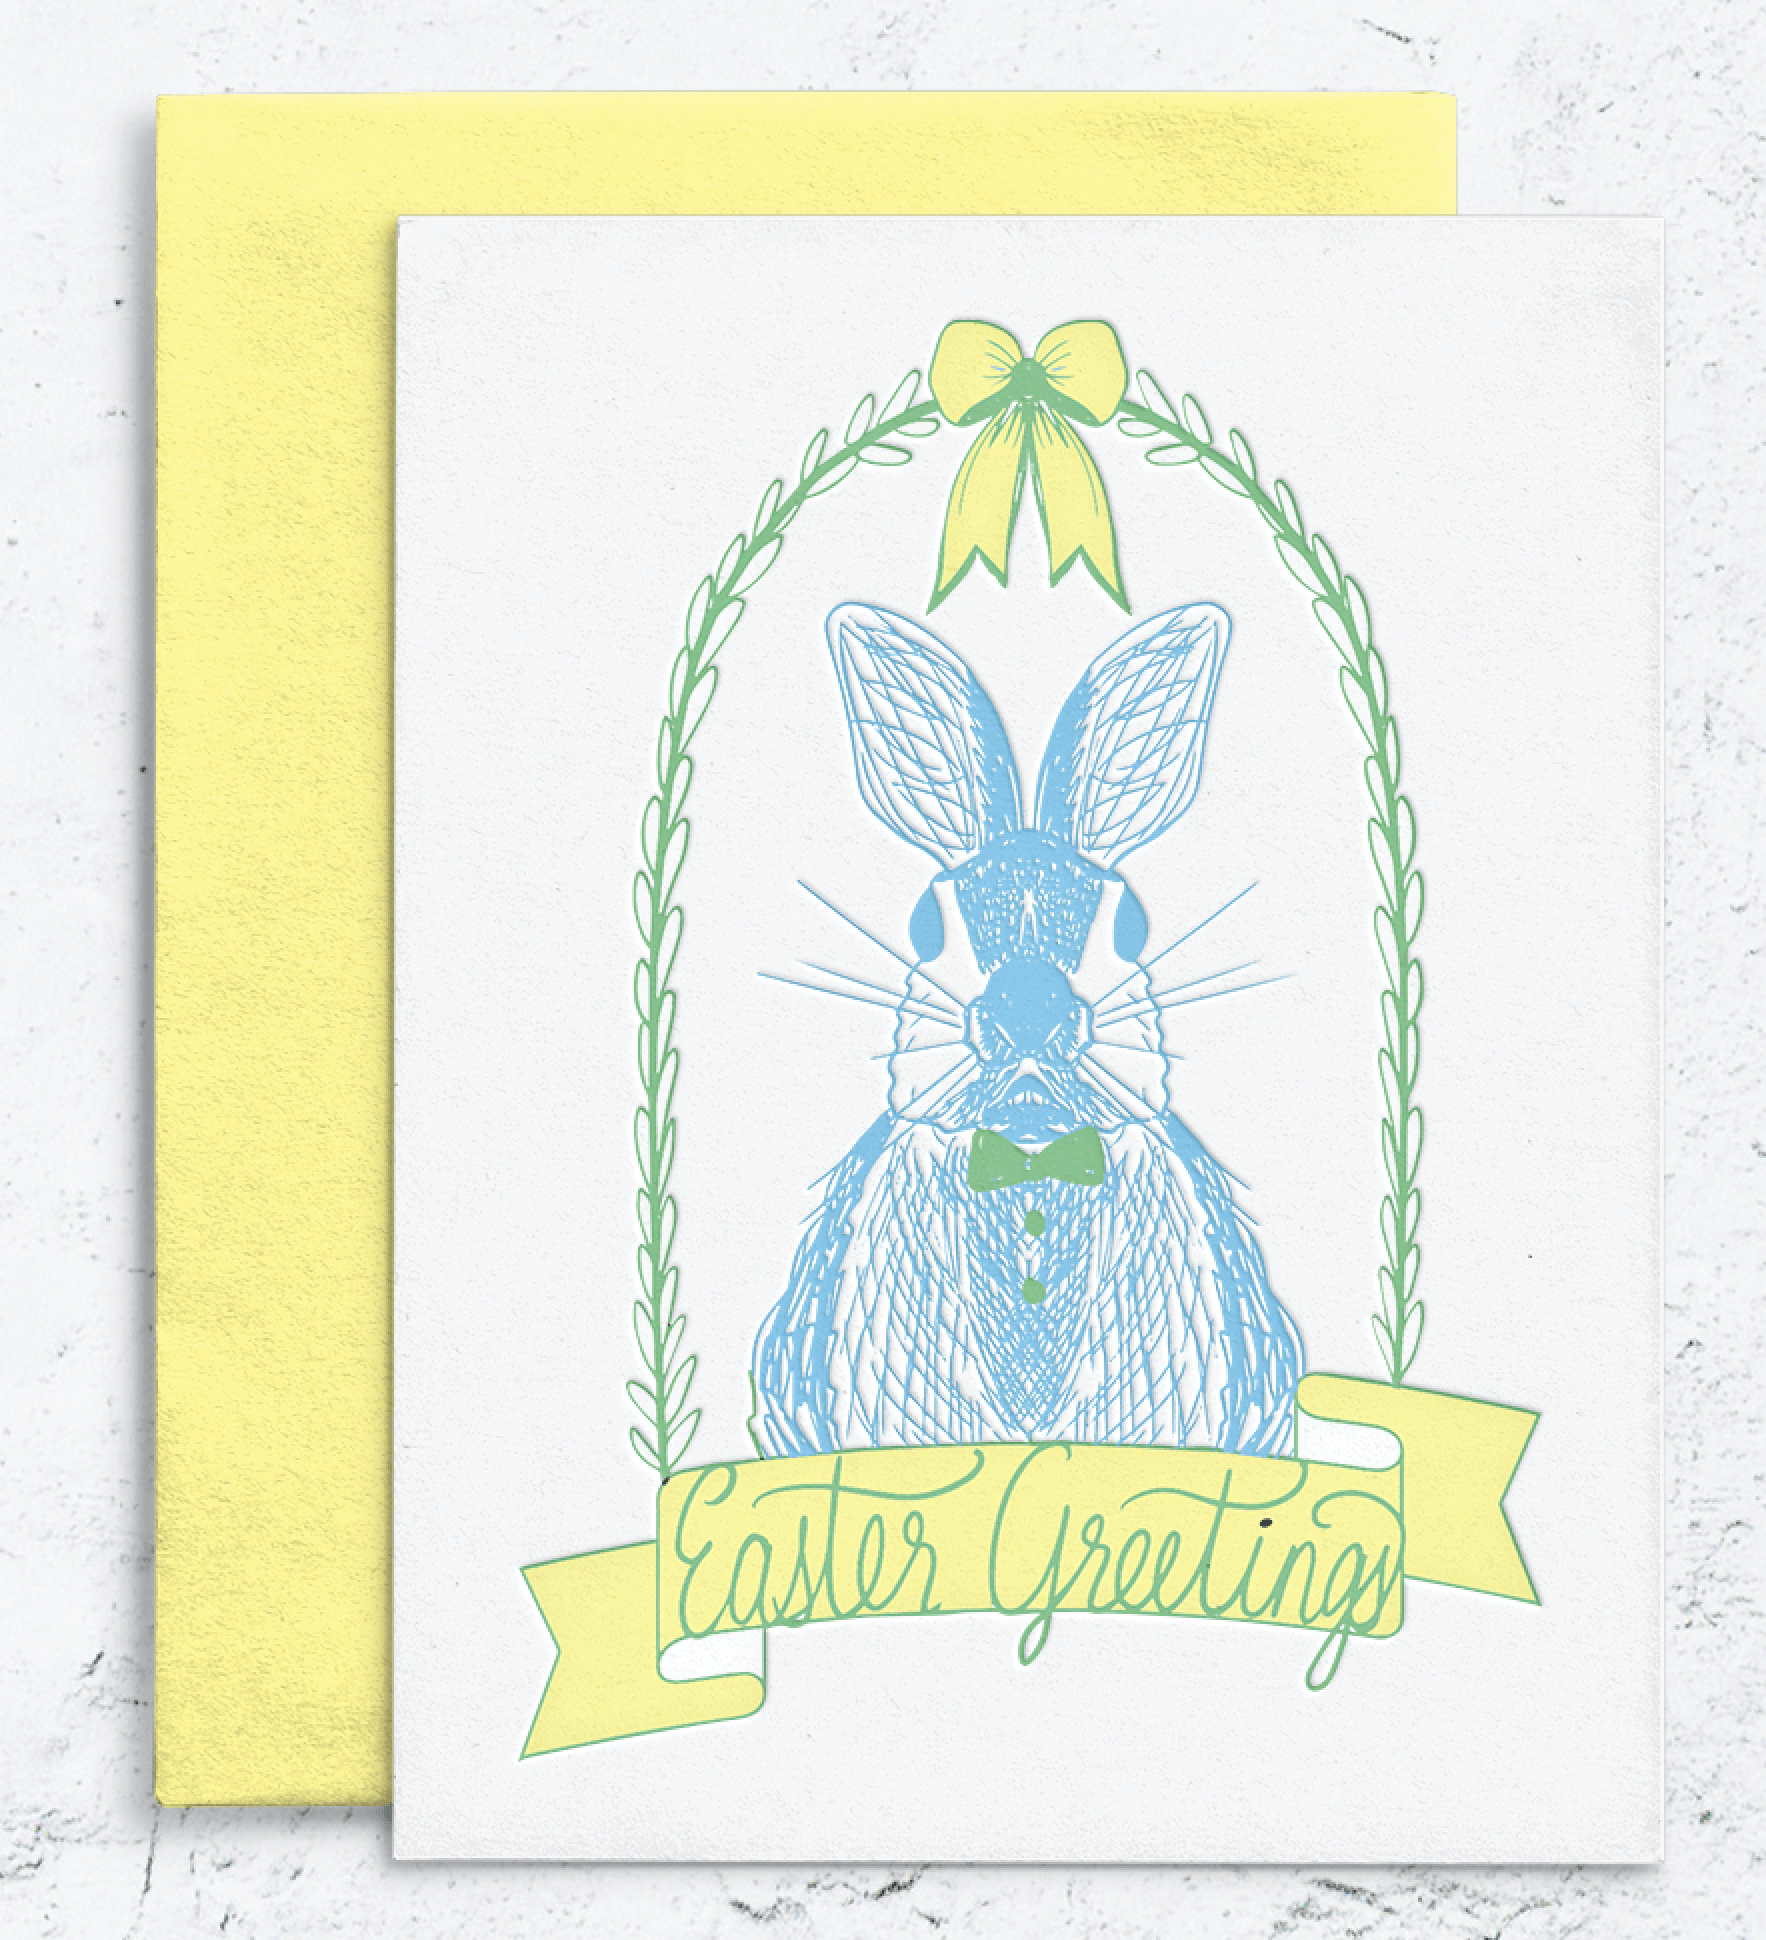 Easter Greetings Letterpress Card